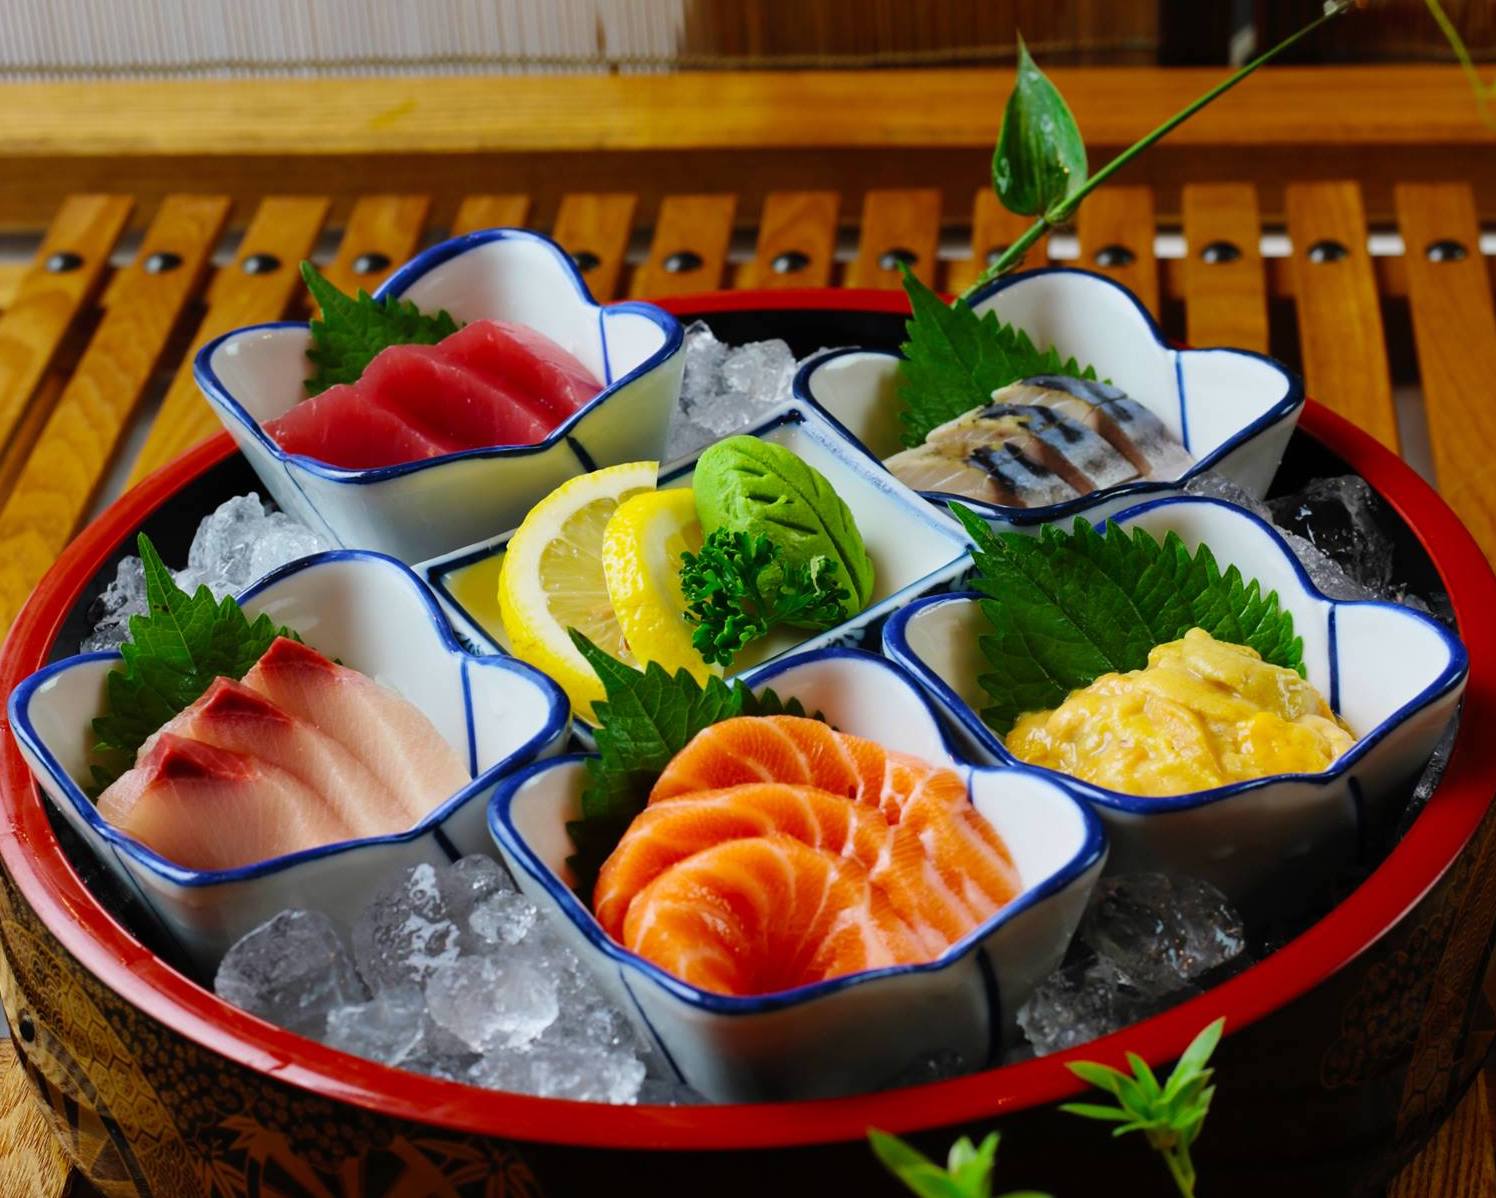 Haru Sushi Bar and Restaurant - sashimi platter